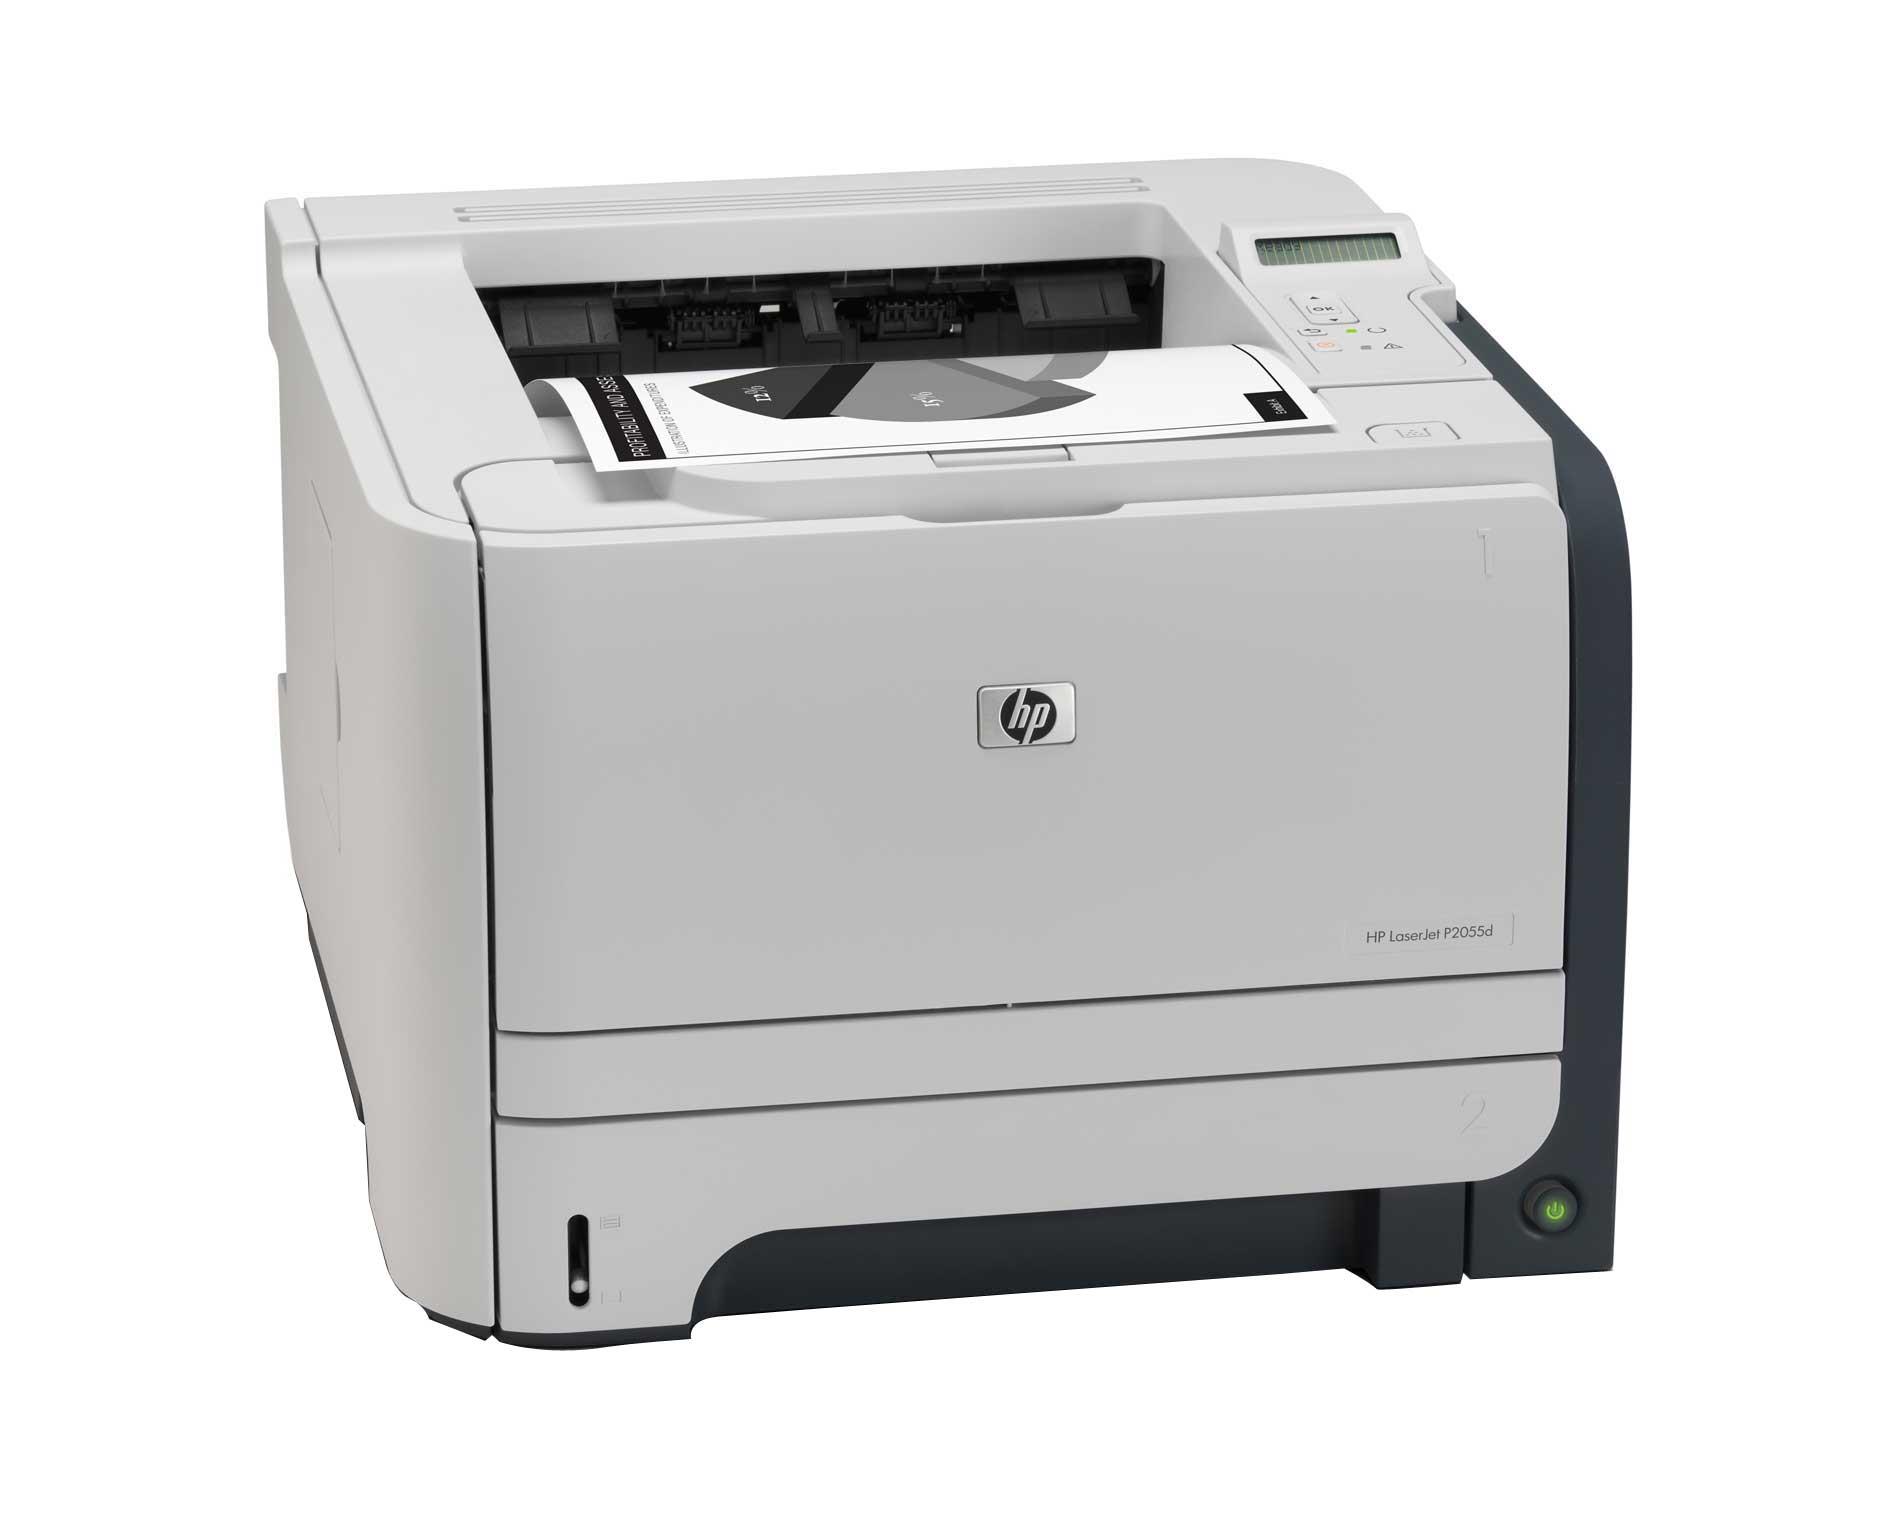 HP CE457A LaserJet P2055d Monochrome Laser Printer